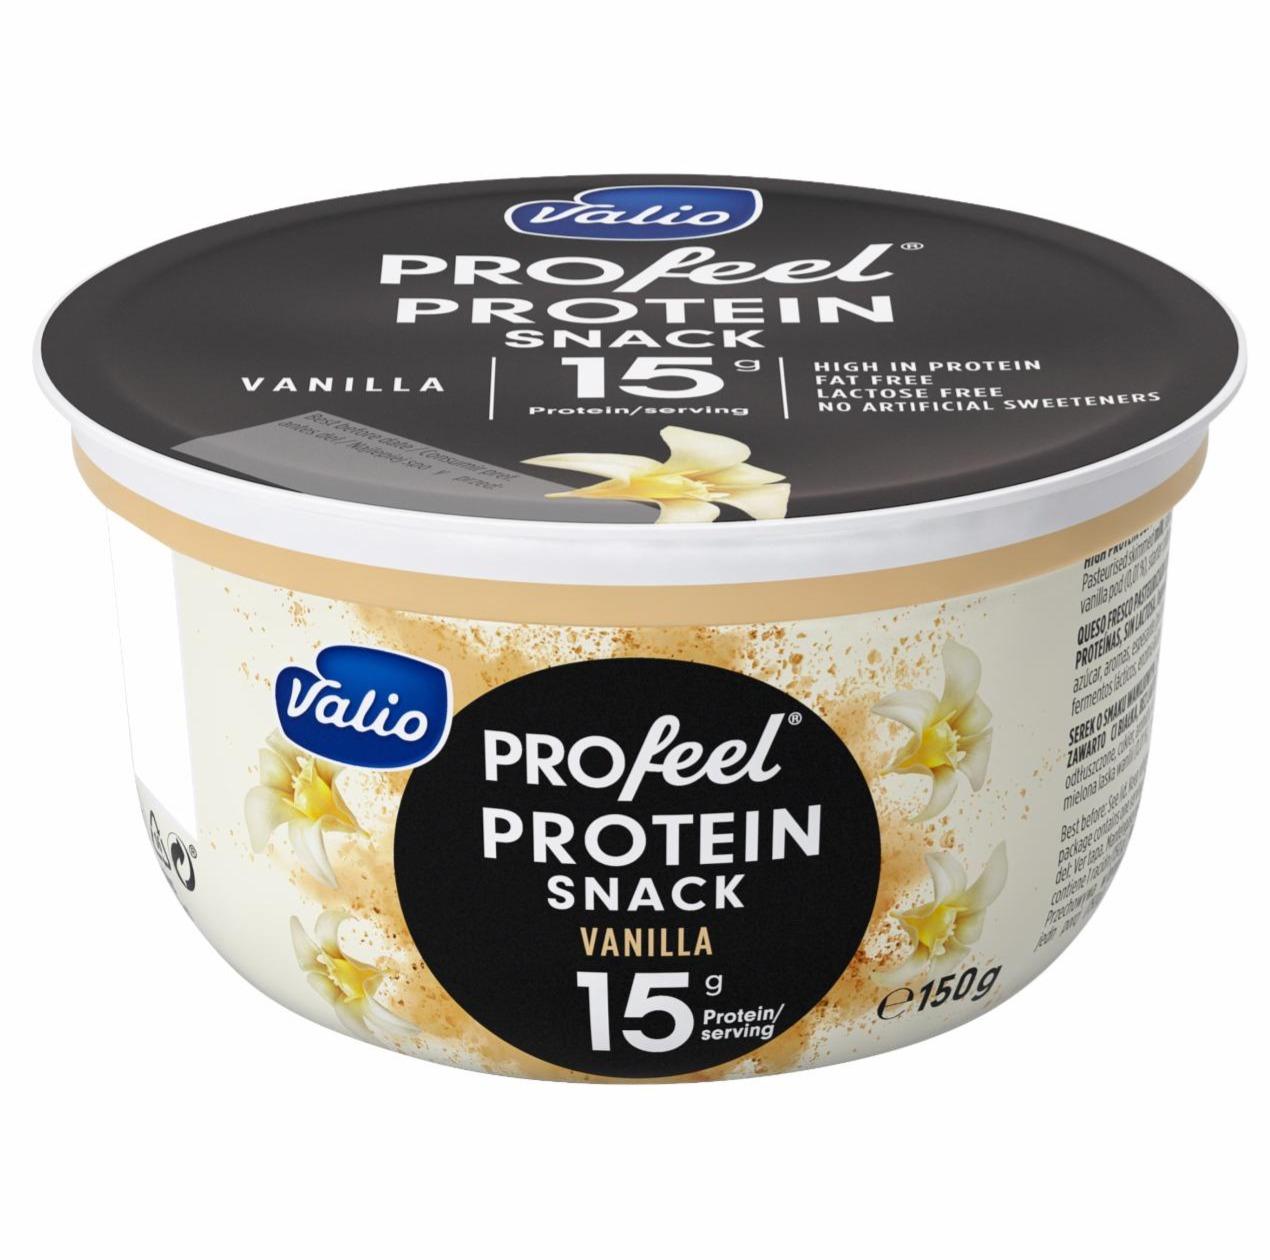 Fotografie - Profeel Protein Snack Vanilla 15g protein Valio